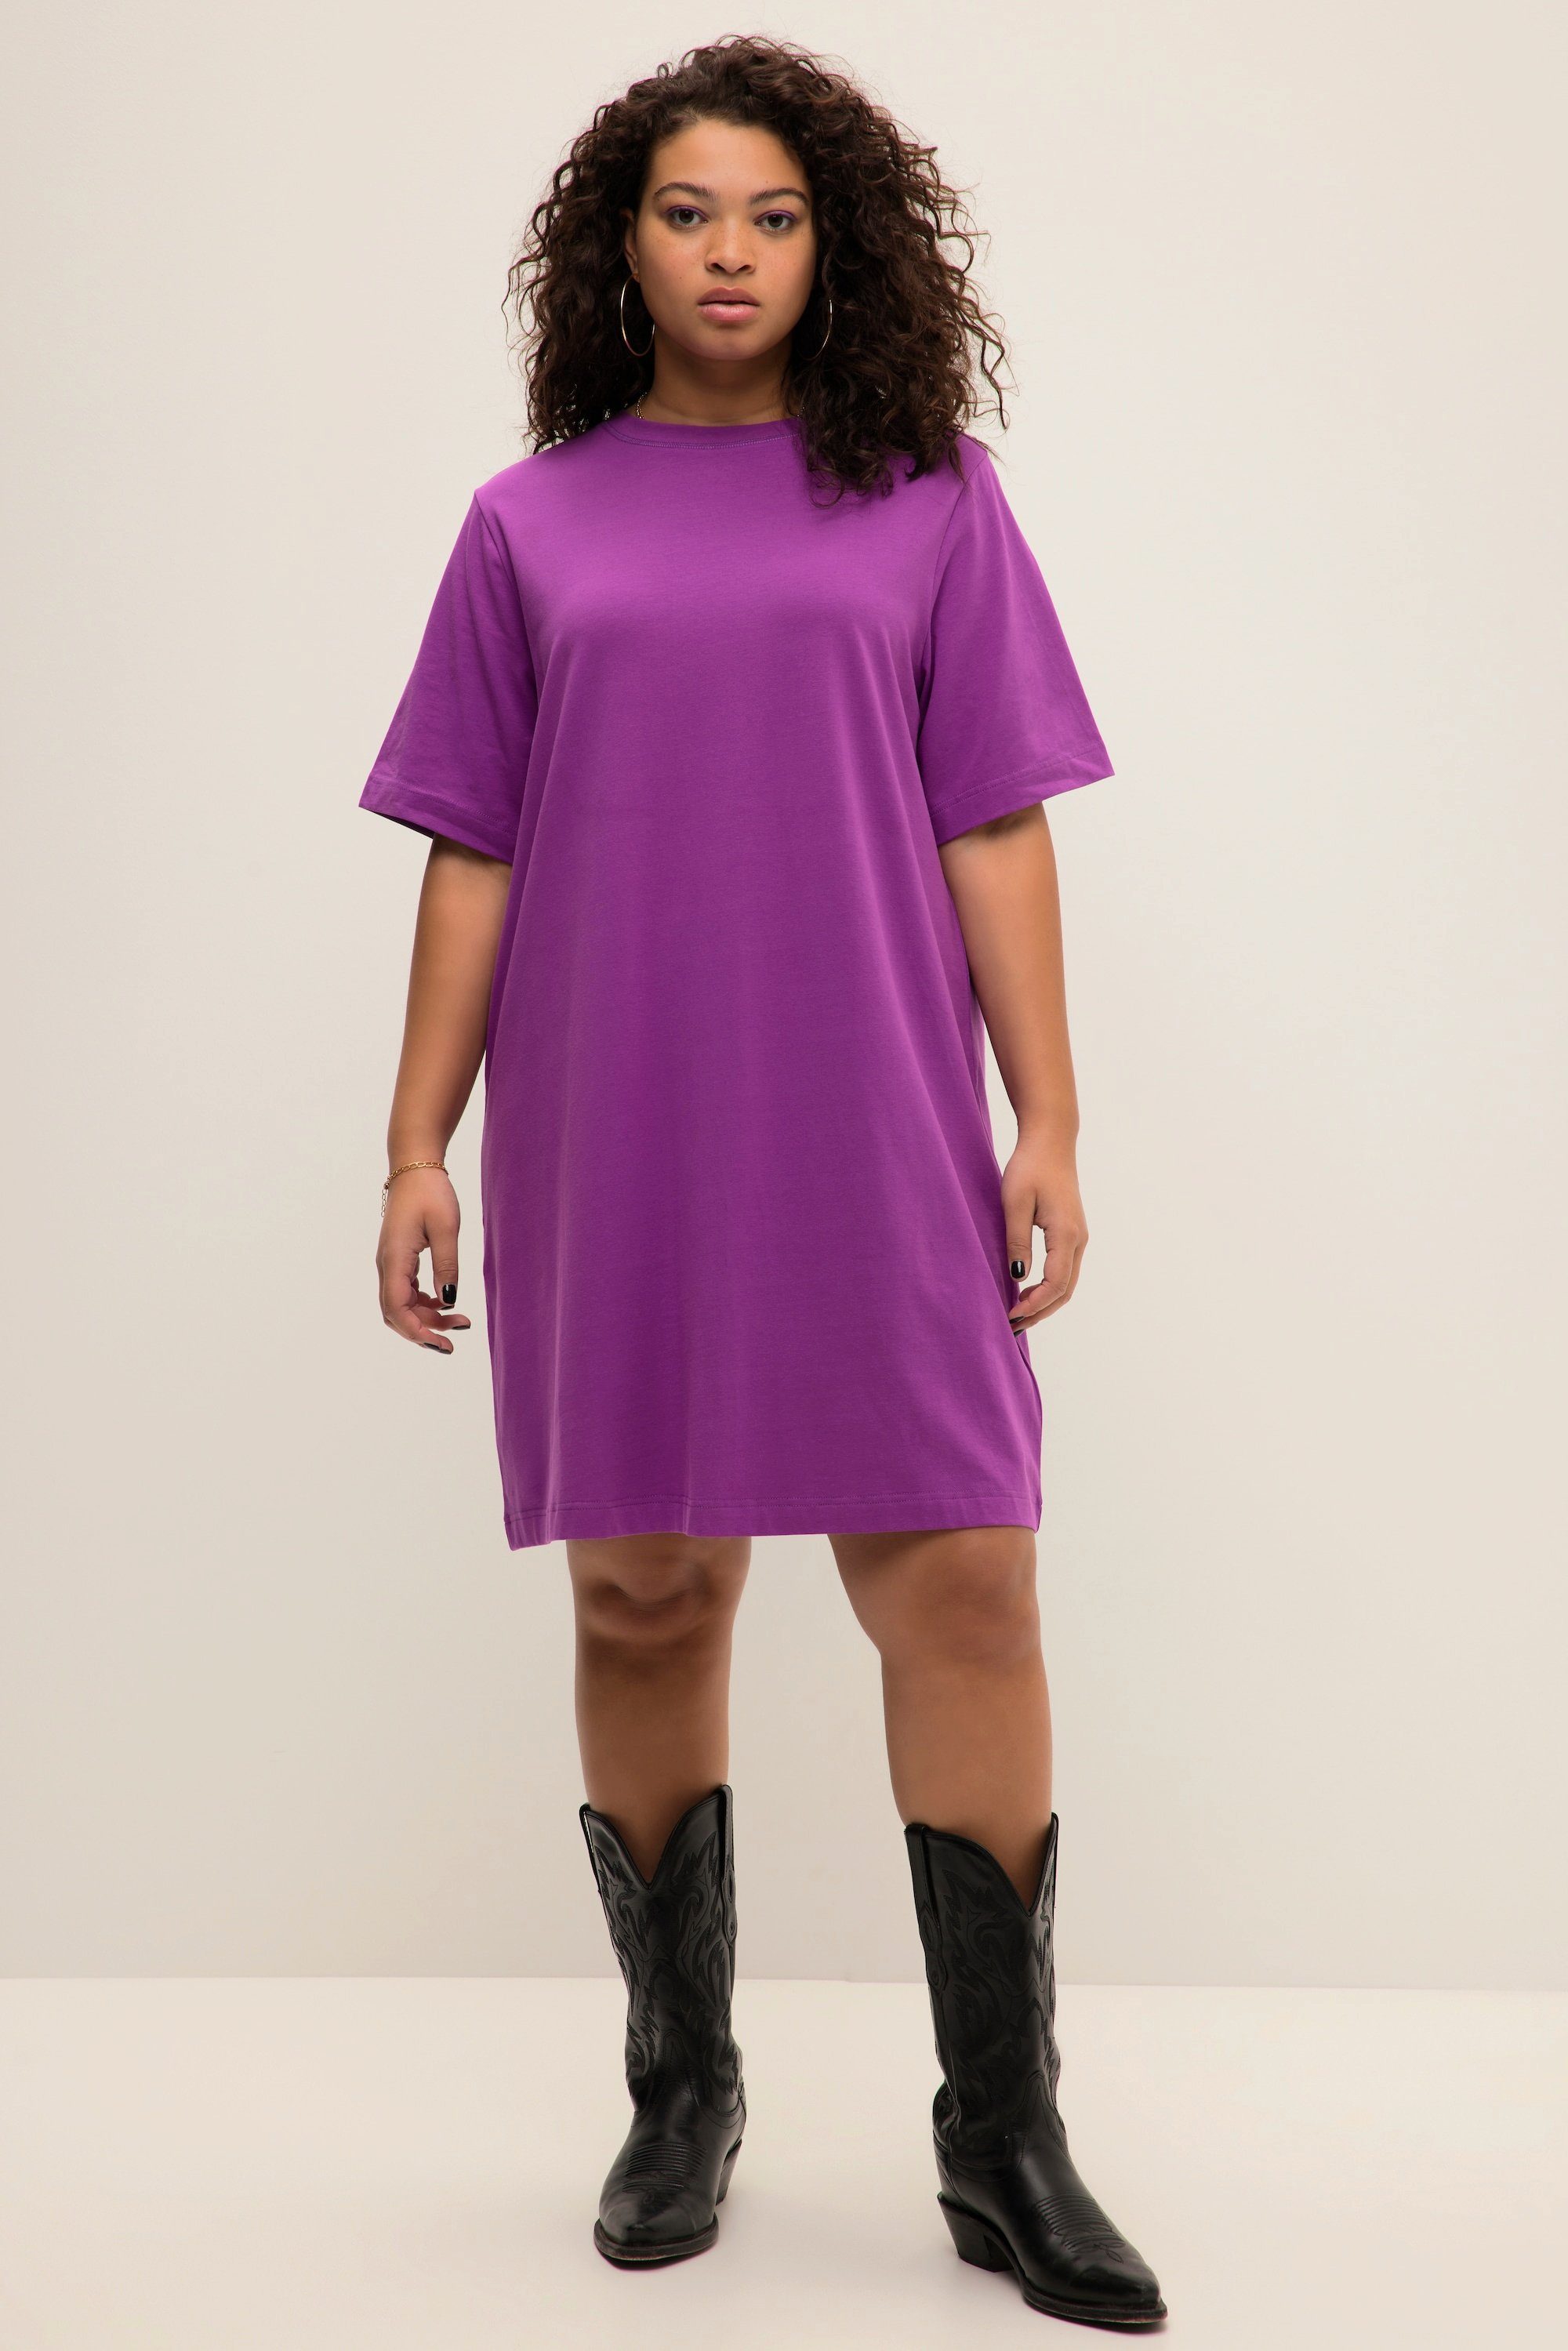 Studio Untold Longshirt Extra Longshirt Oversized Rundhals Halbarm violett